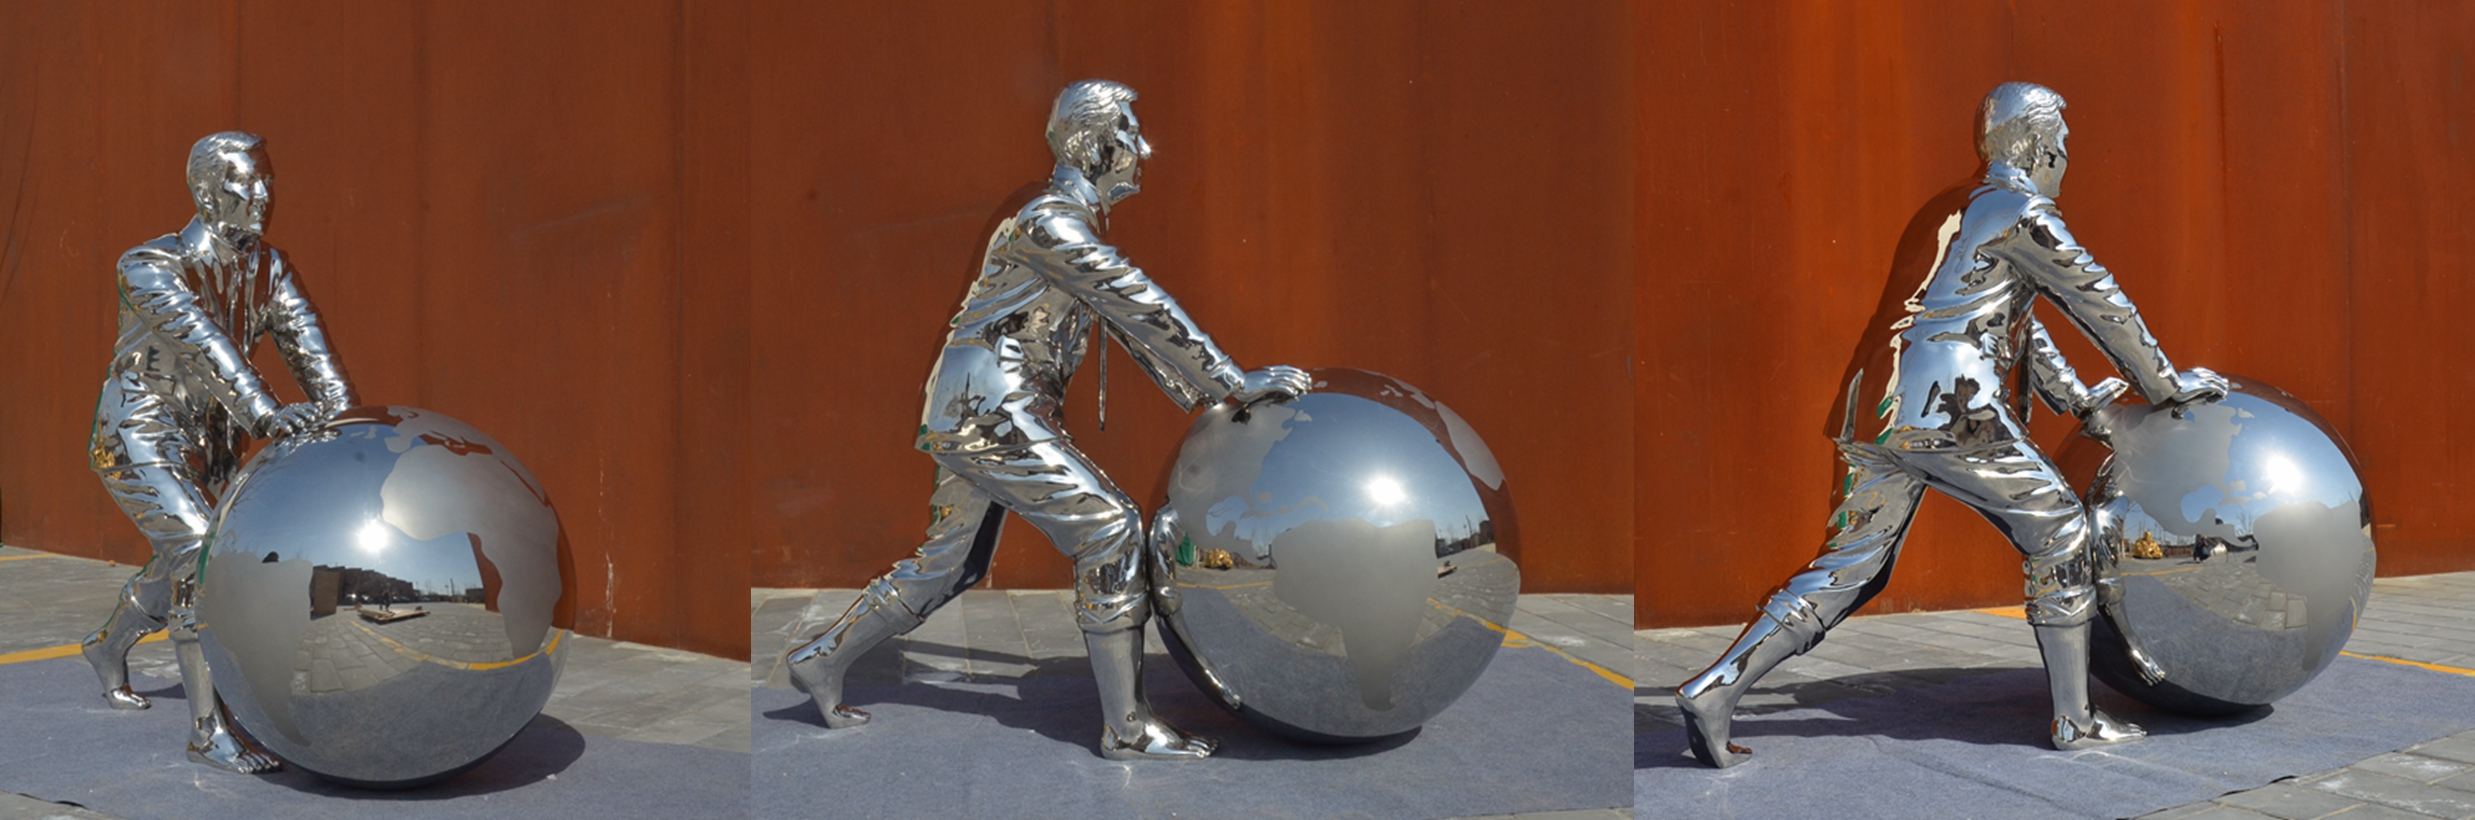 mirror polish stainless steel statue of Figure & Globe